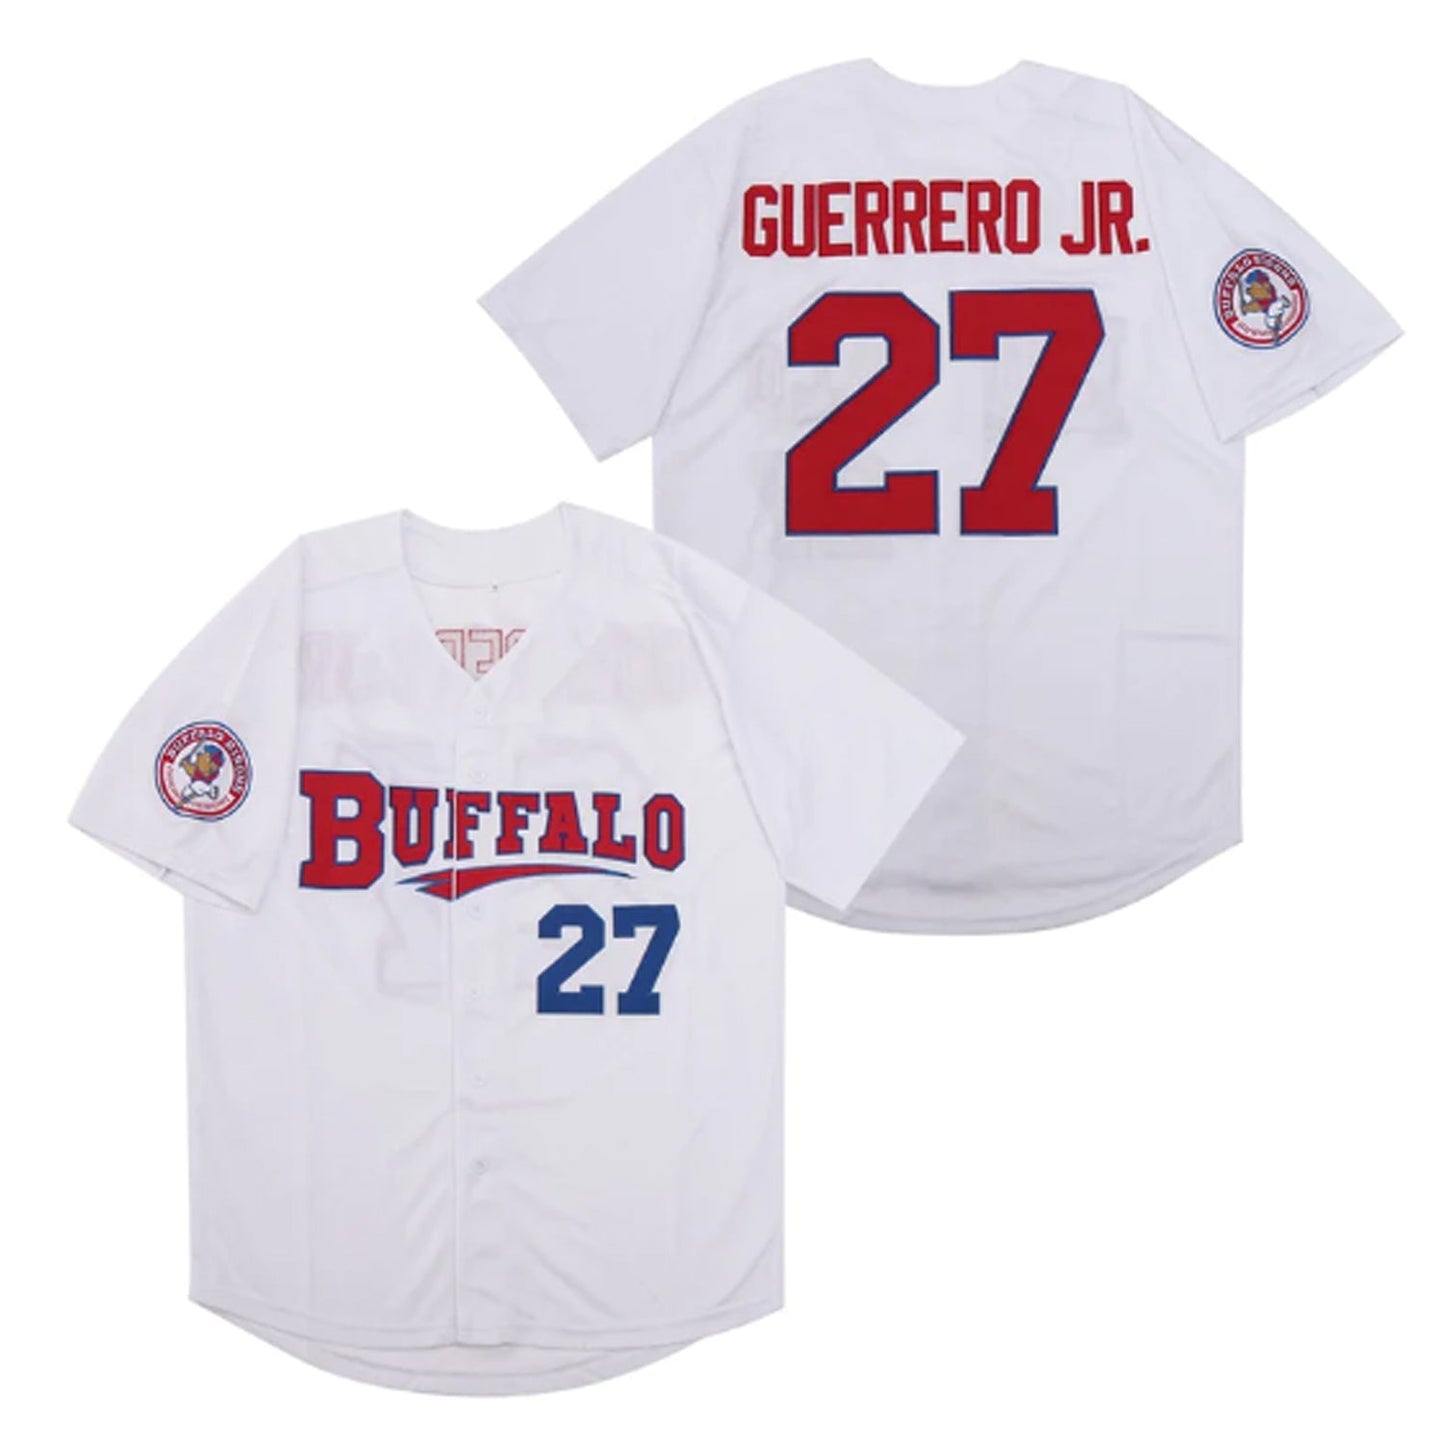 Buffalo Bisons Guerrero Jr. Baseball 27 Jersey